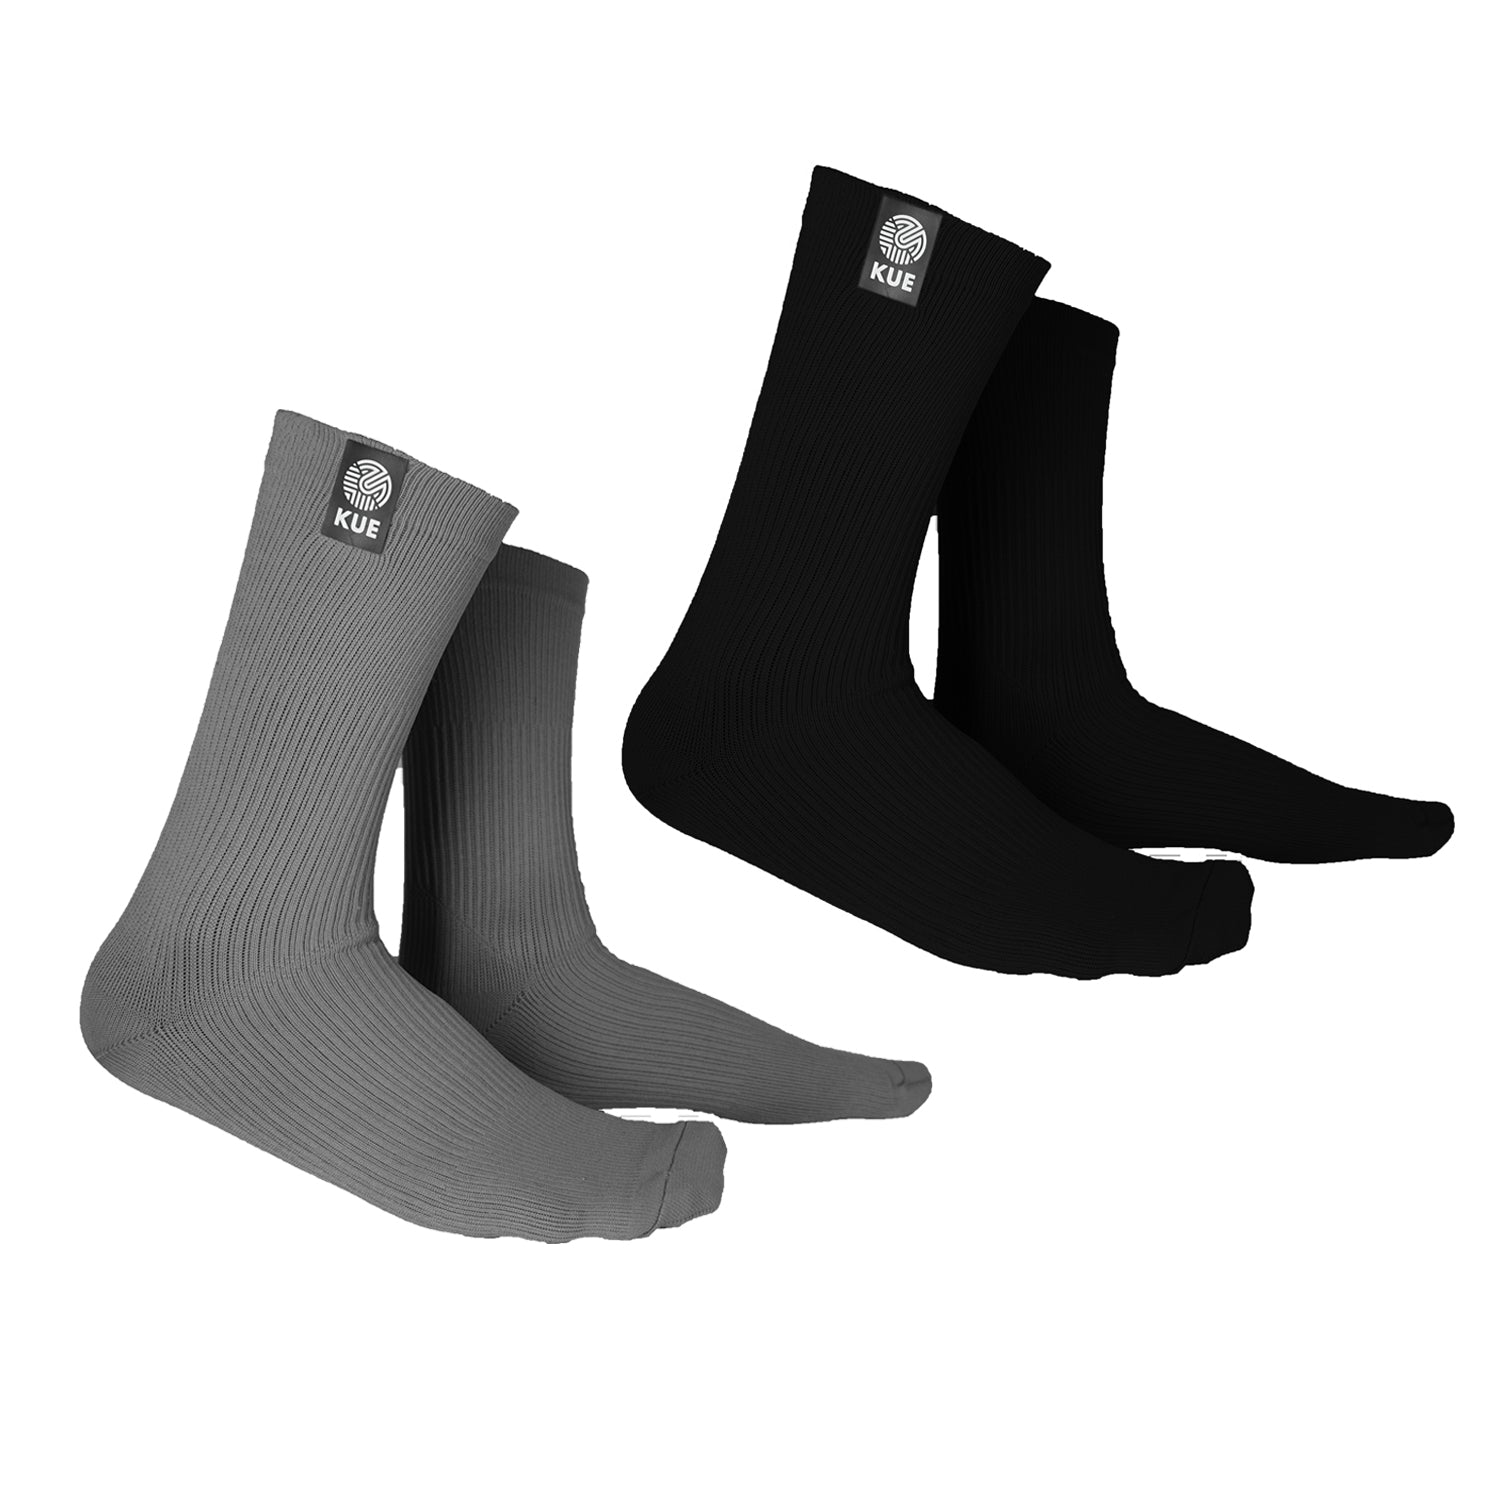 Grey and Black Crew Length Socks Combo